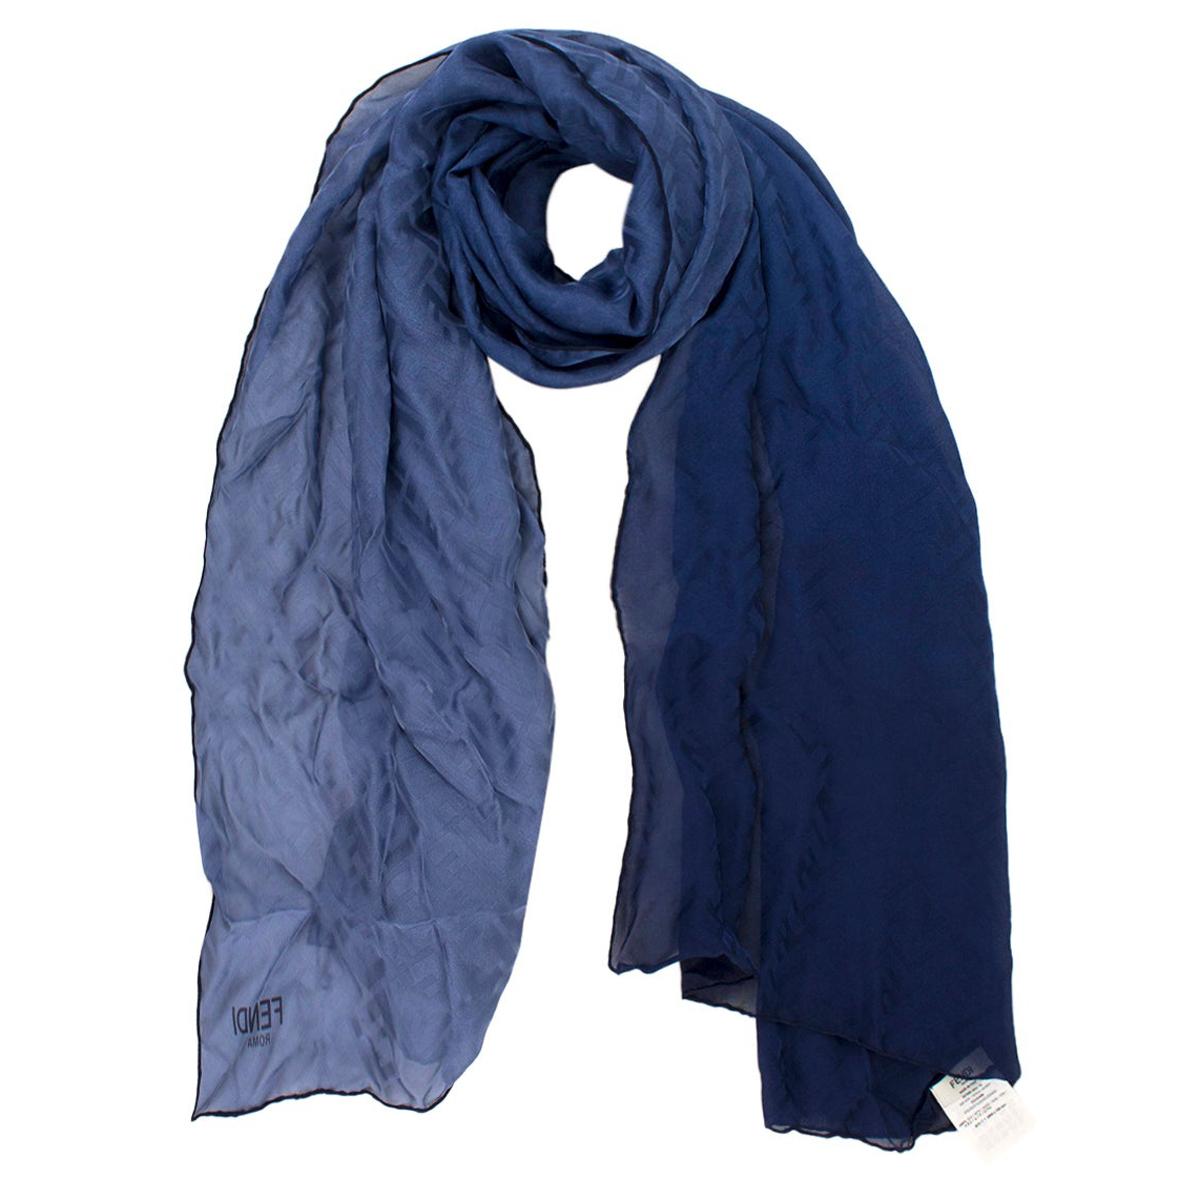 discount 67% Mango shawl Navy Blue Single WOMEN FASHION Accessories Shawl Navy Blue 